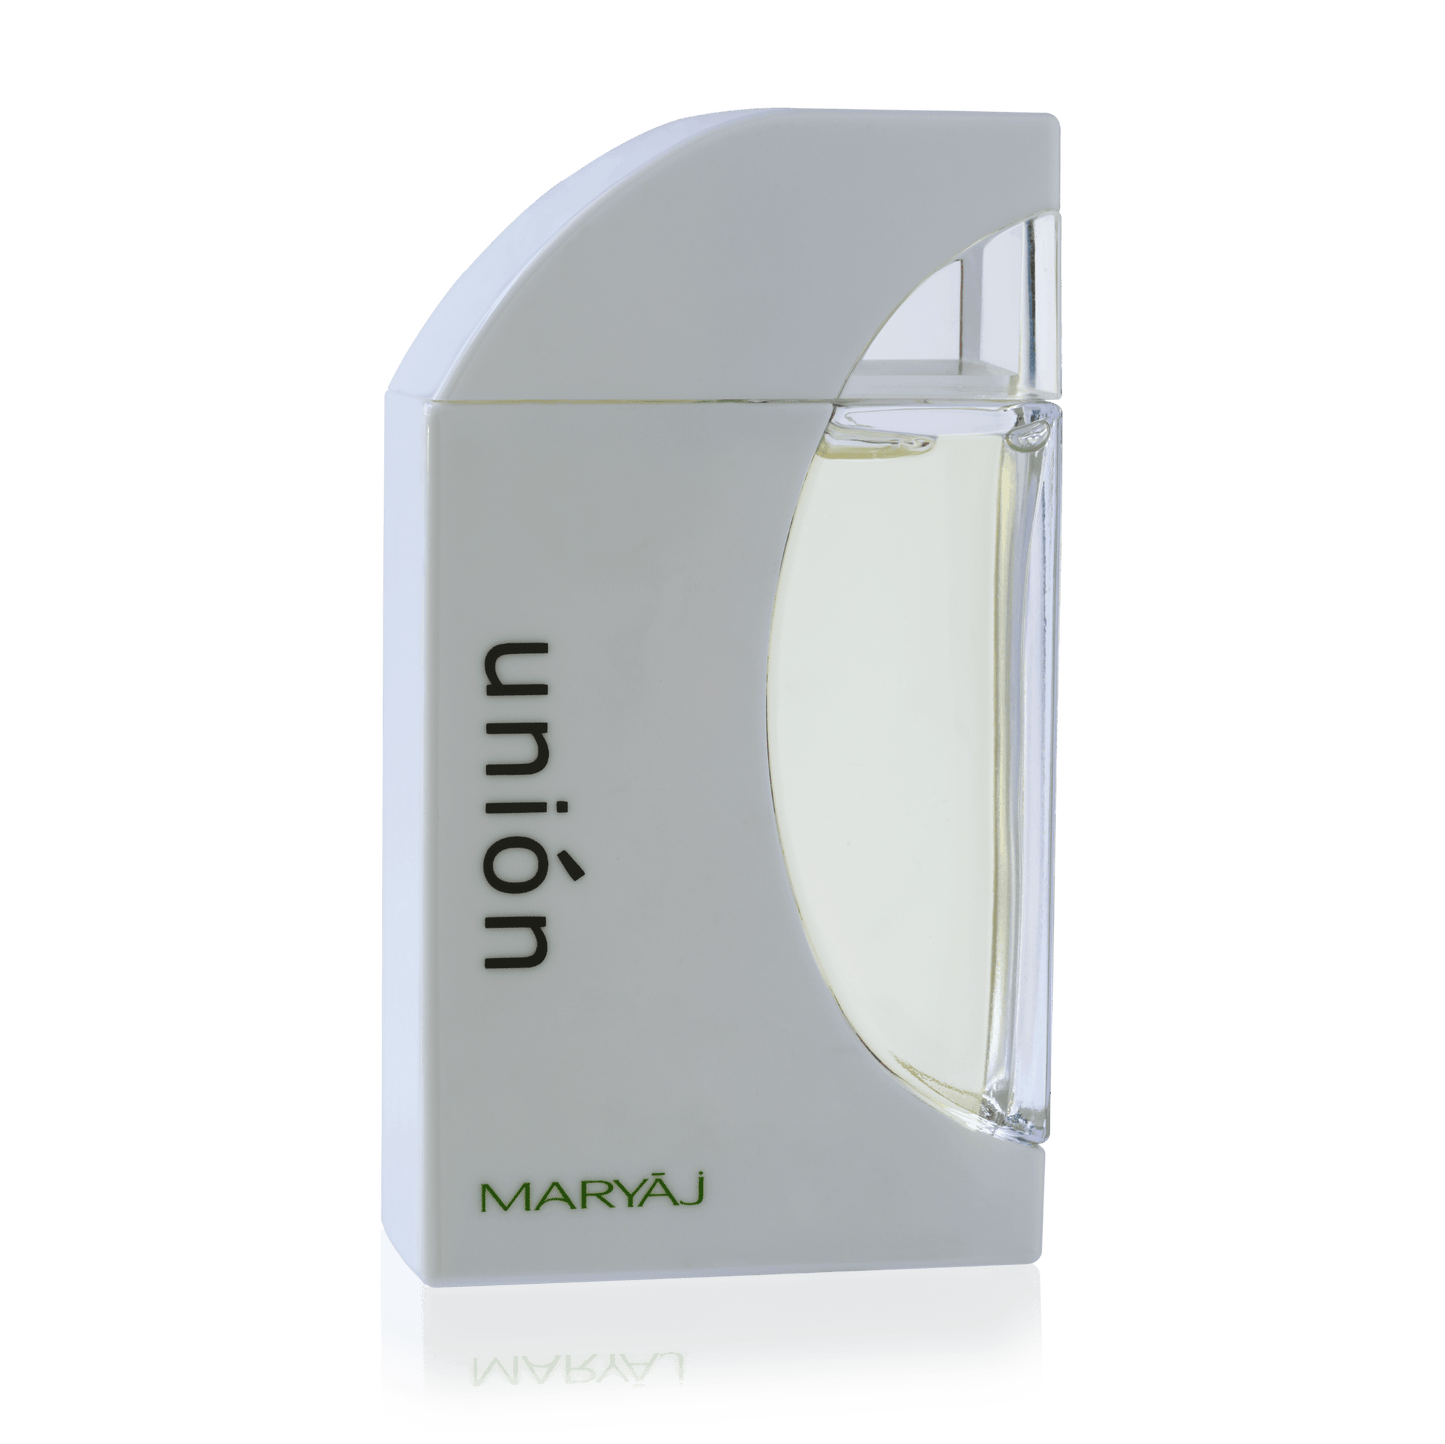 Union Perfume Gift Set for Men (Eau de Parfum Spray 100ml + Marvel Perfume Body Spray 200ml)